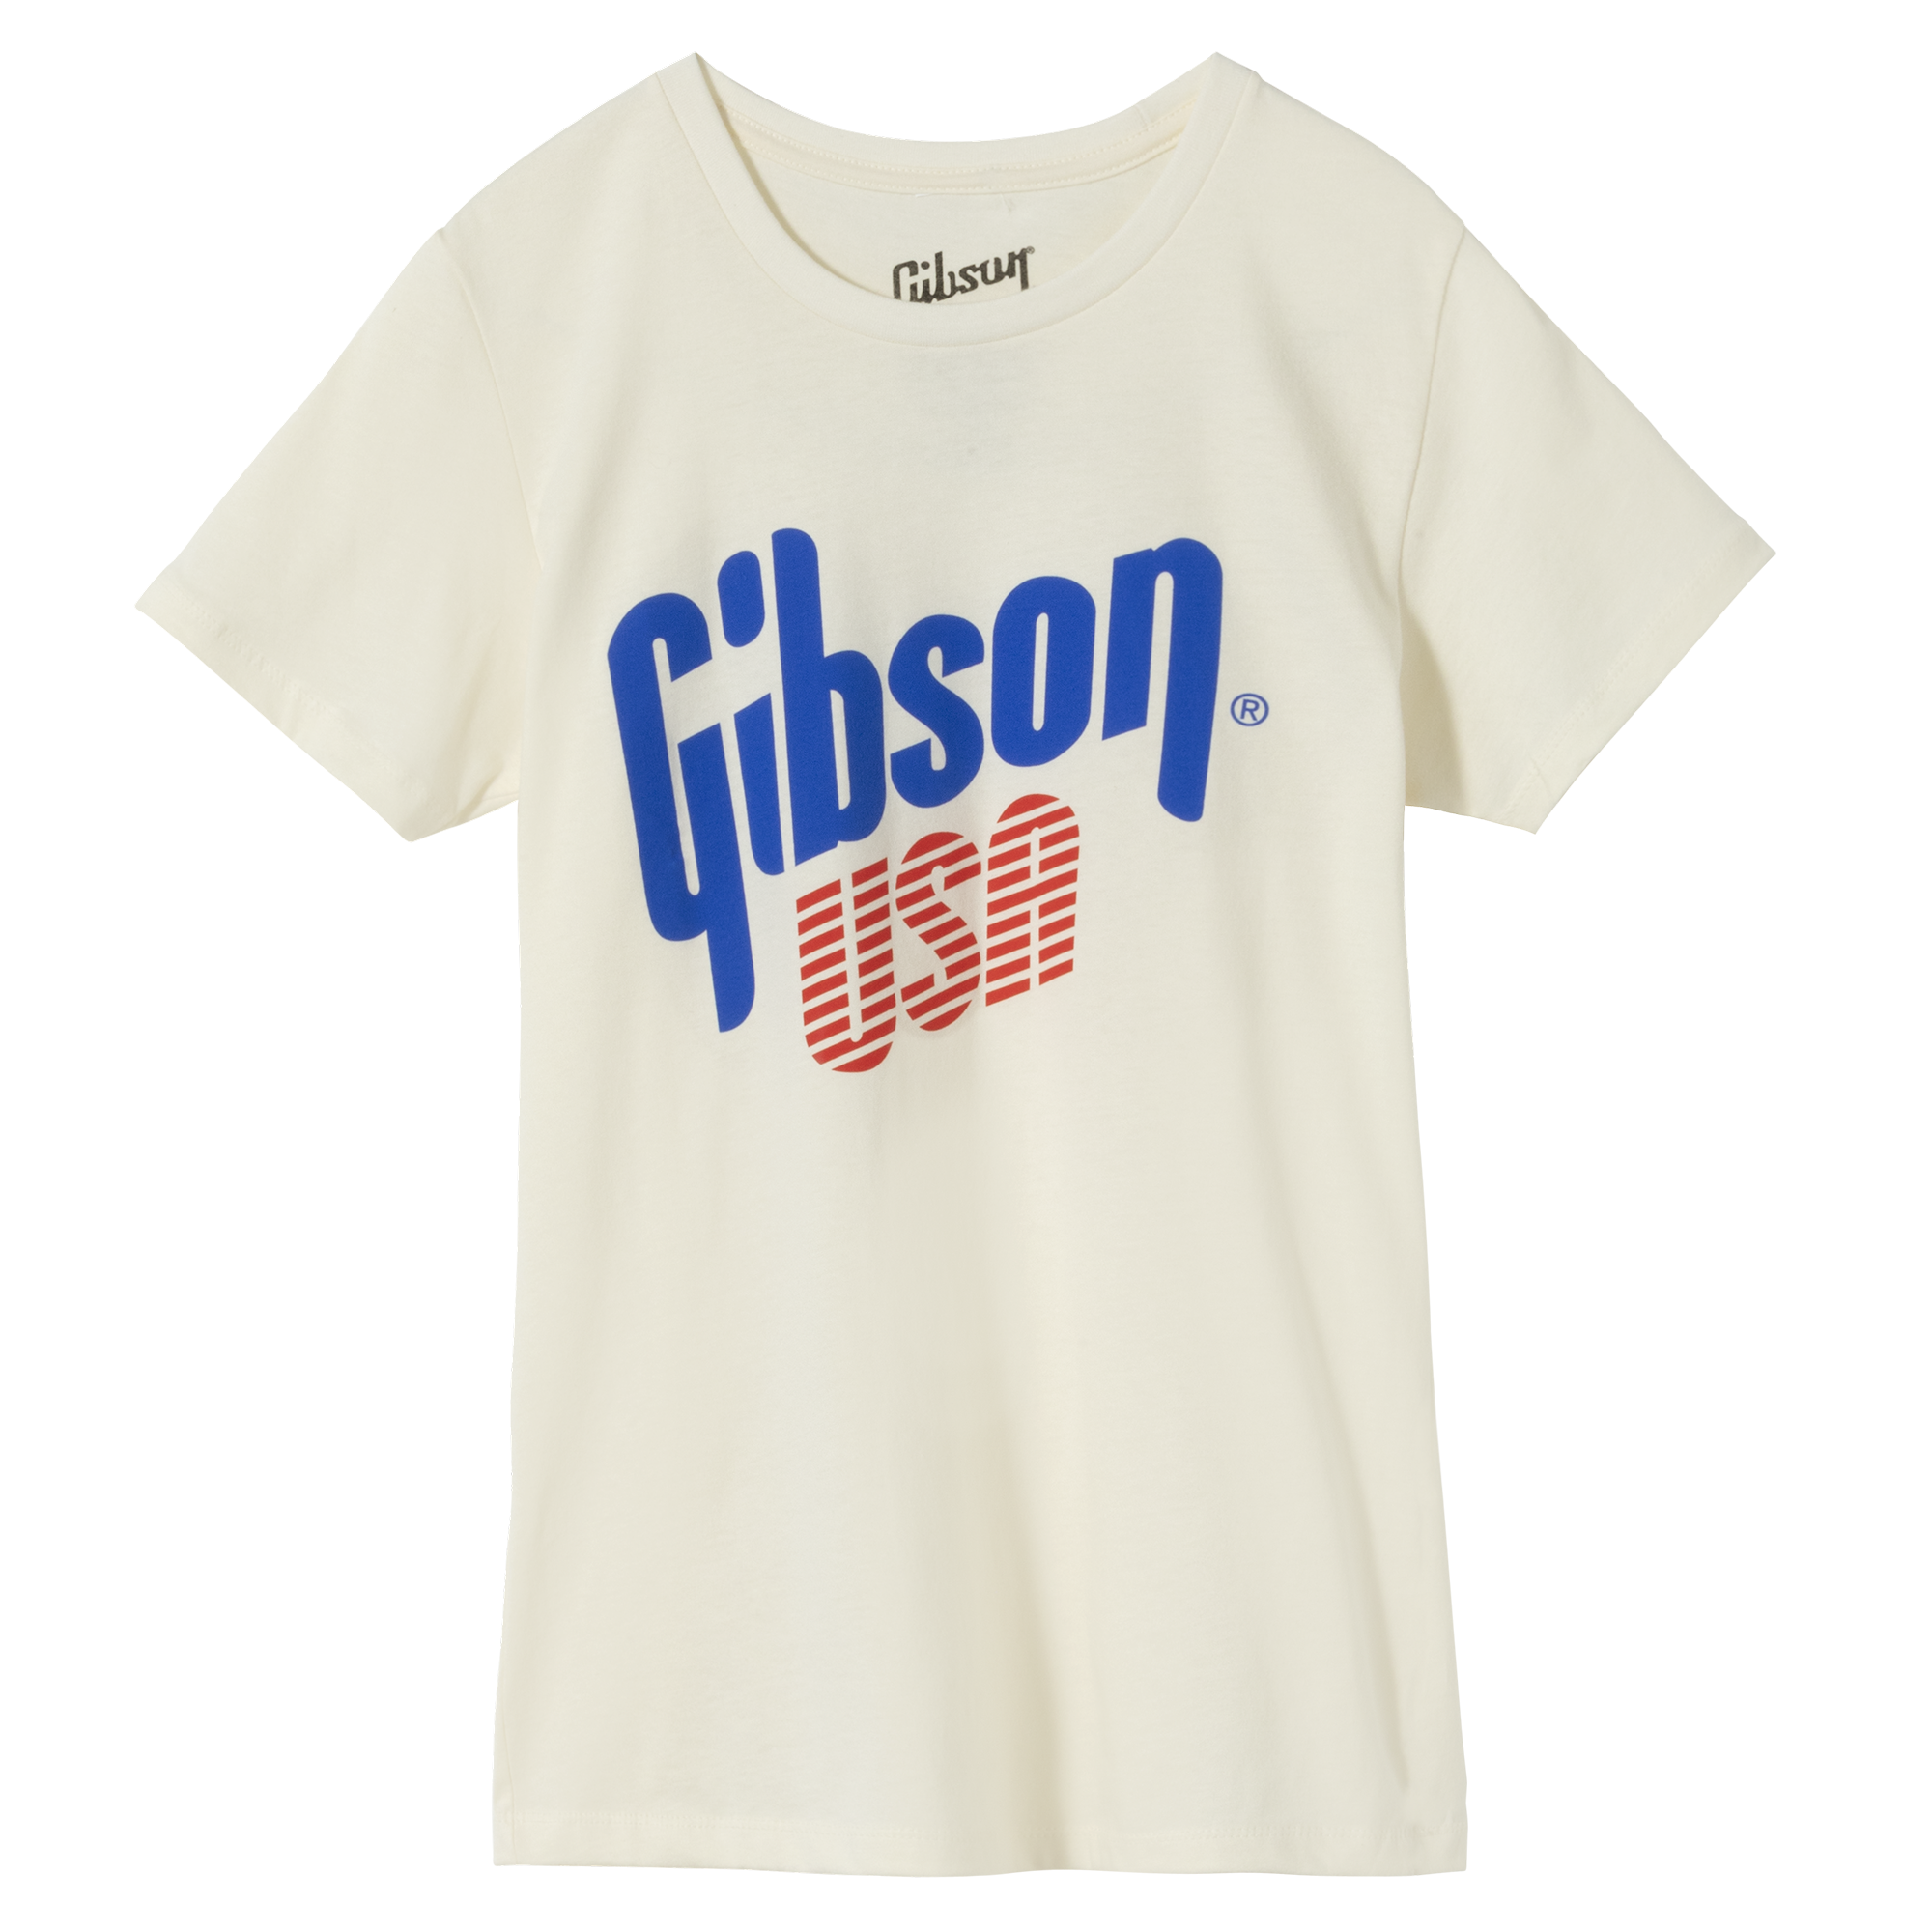 Gibson | Gibson USA Women's Tee